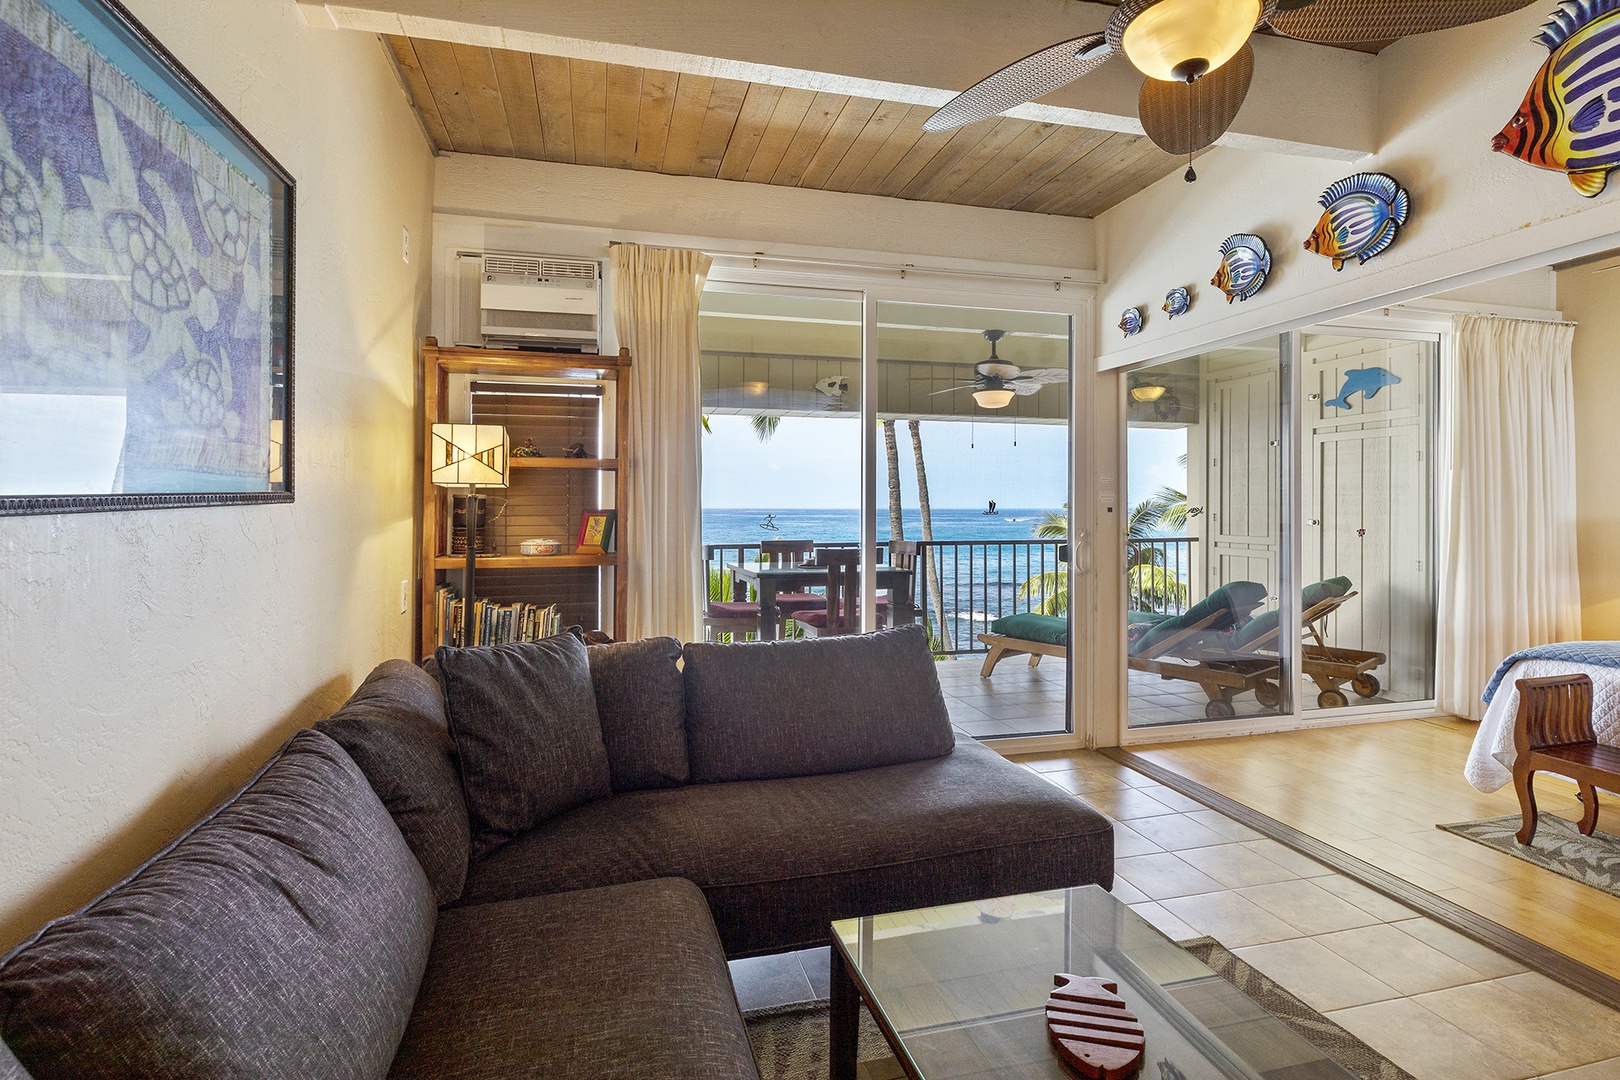 Living room with flat screen TV, ocean views